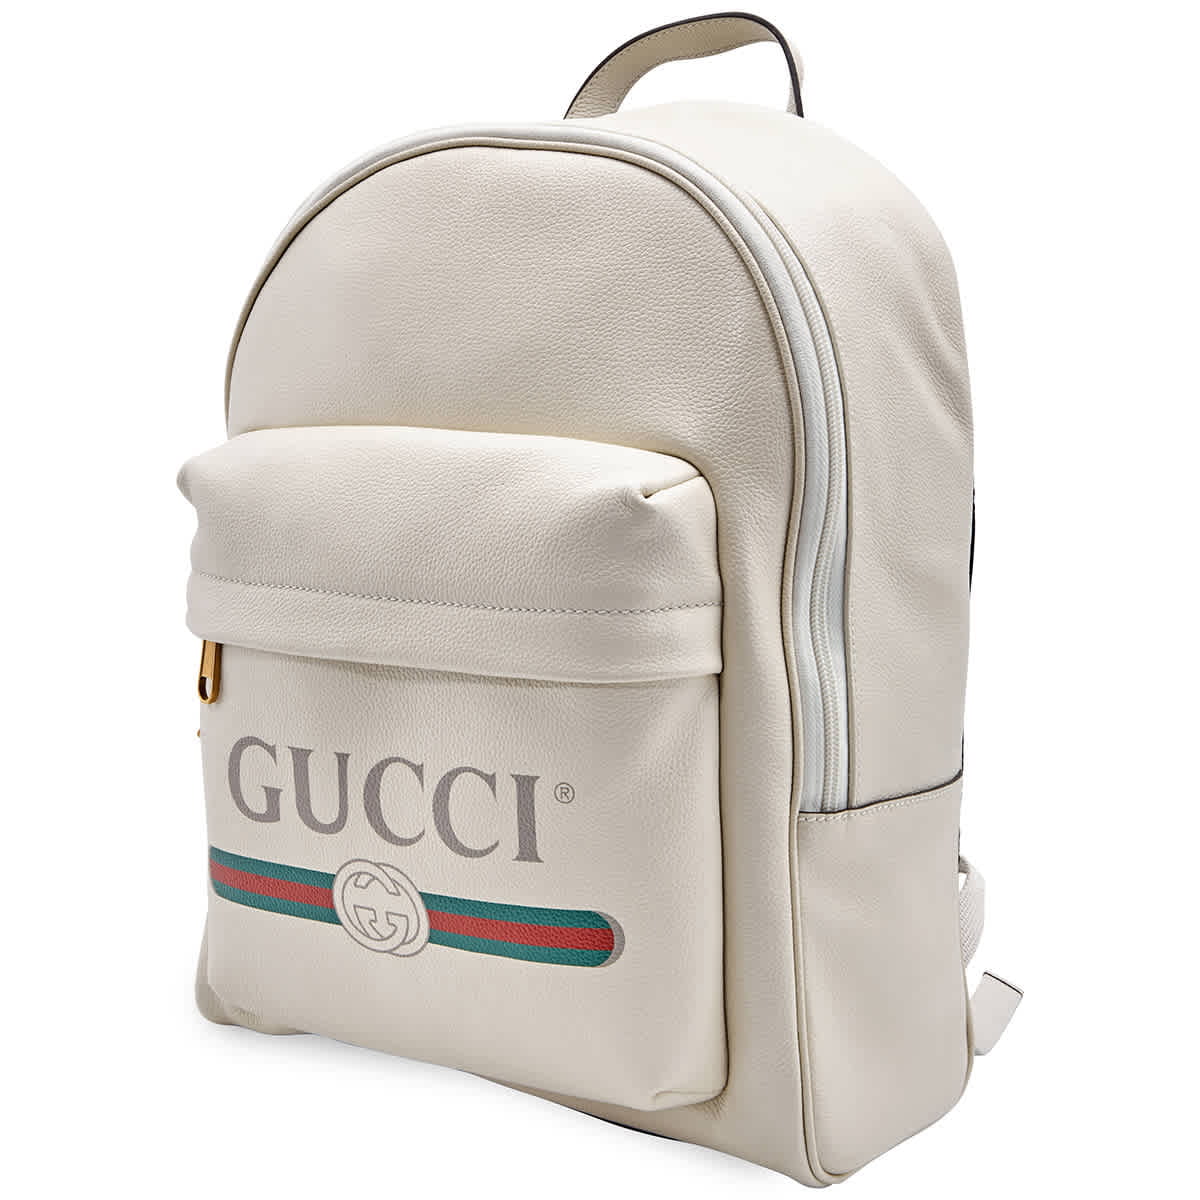 gucci school bag price